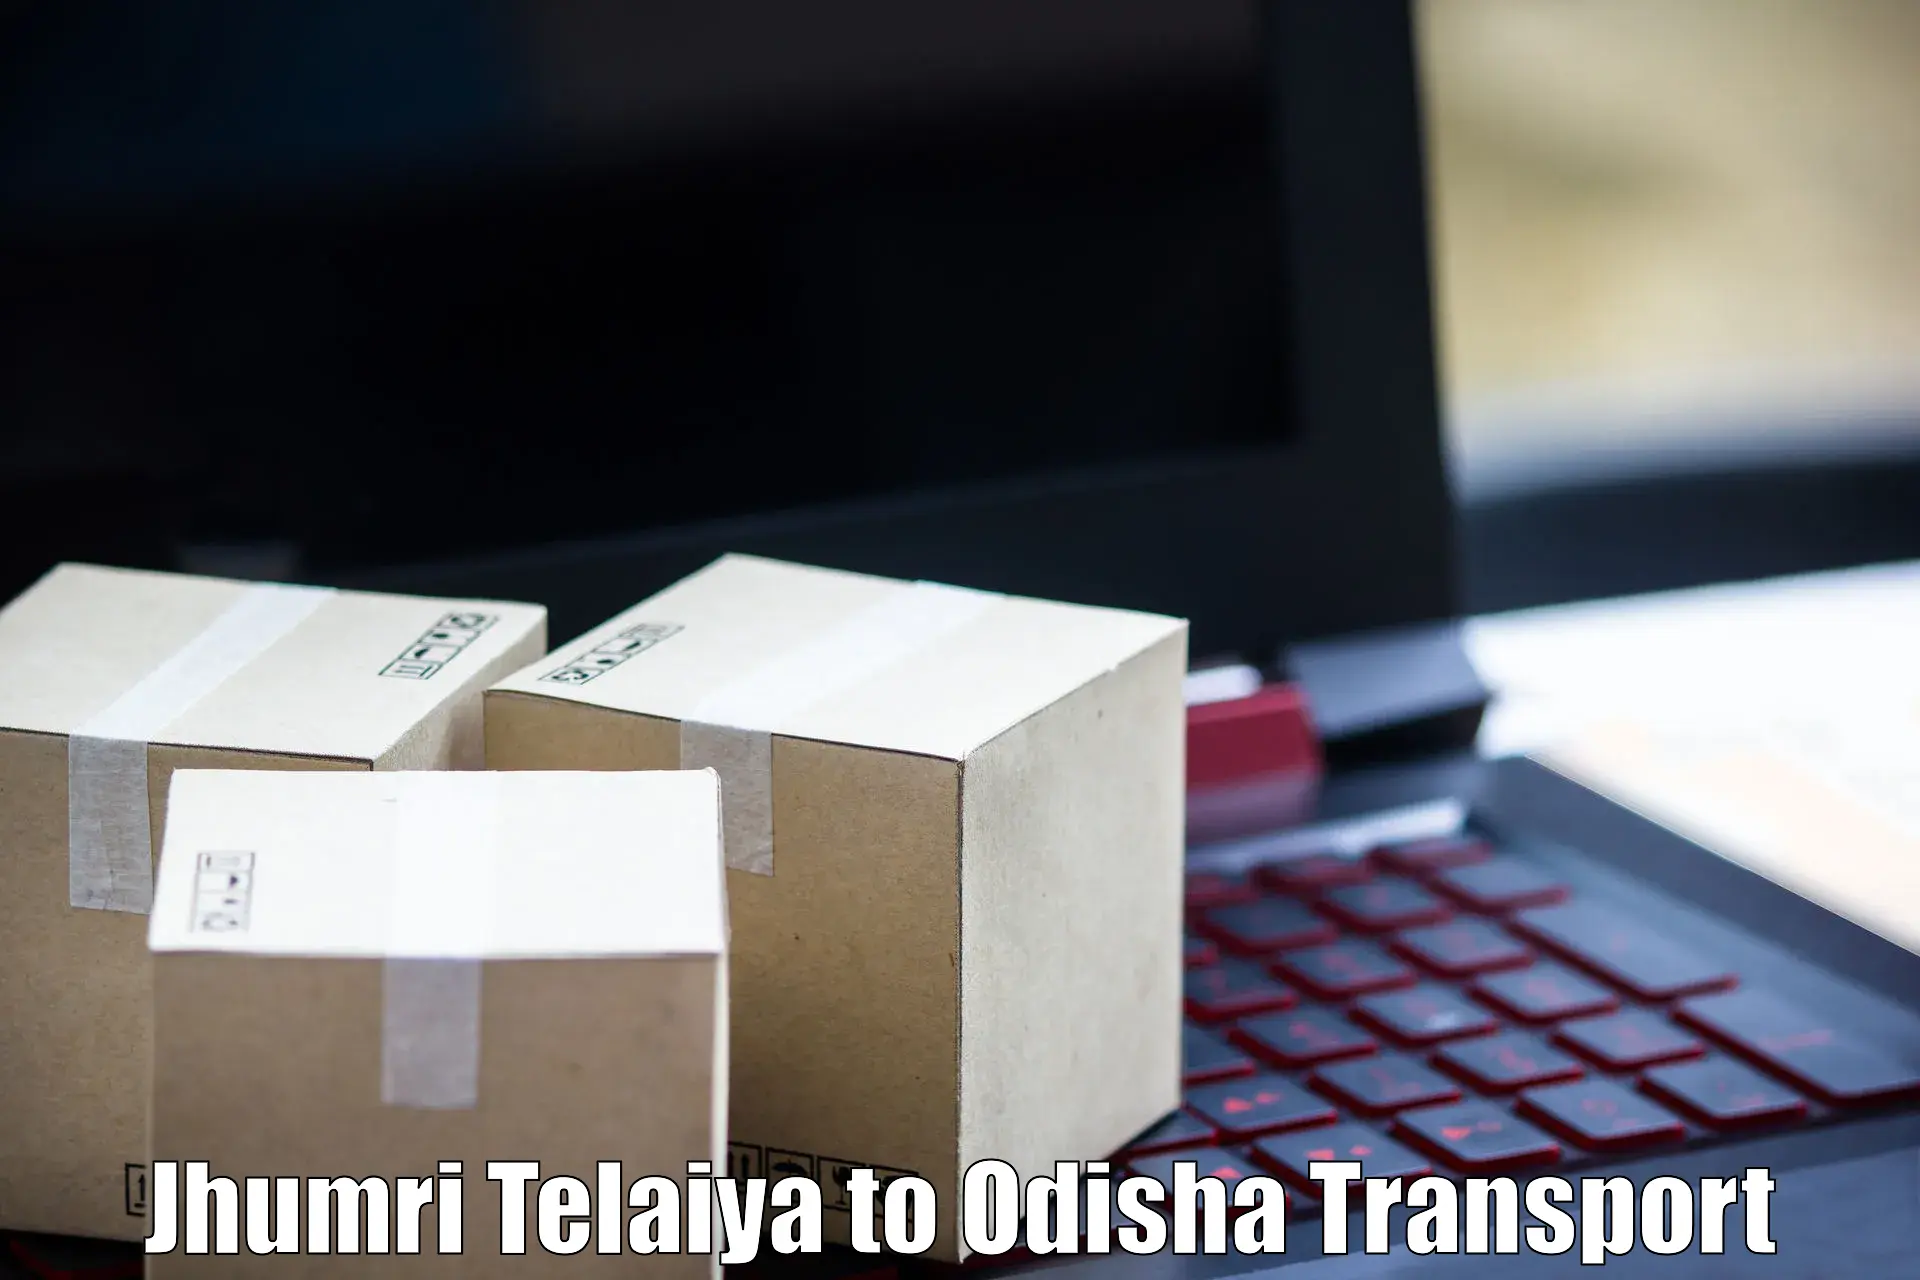 Transportation services Jhumri Telaiya to Odisha